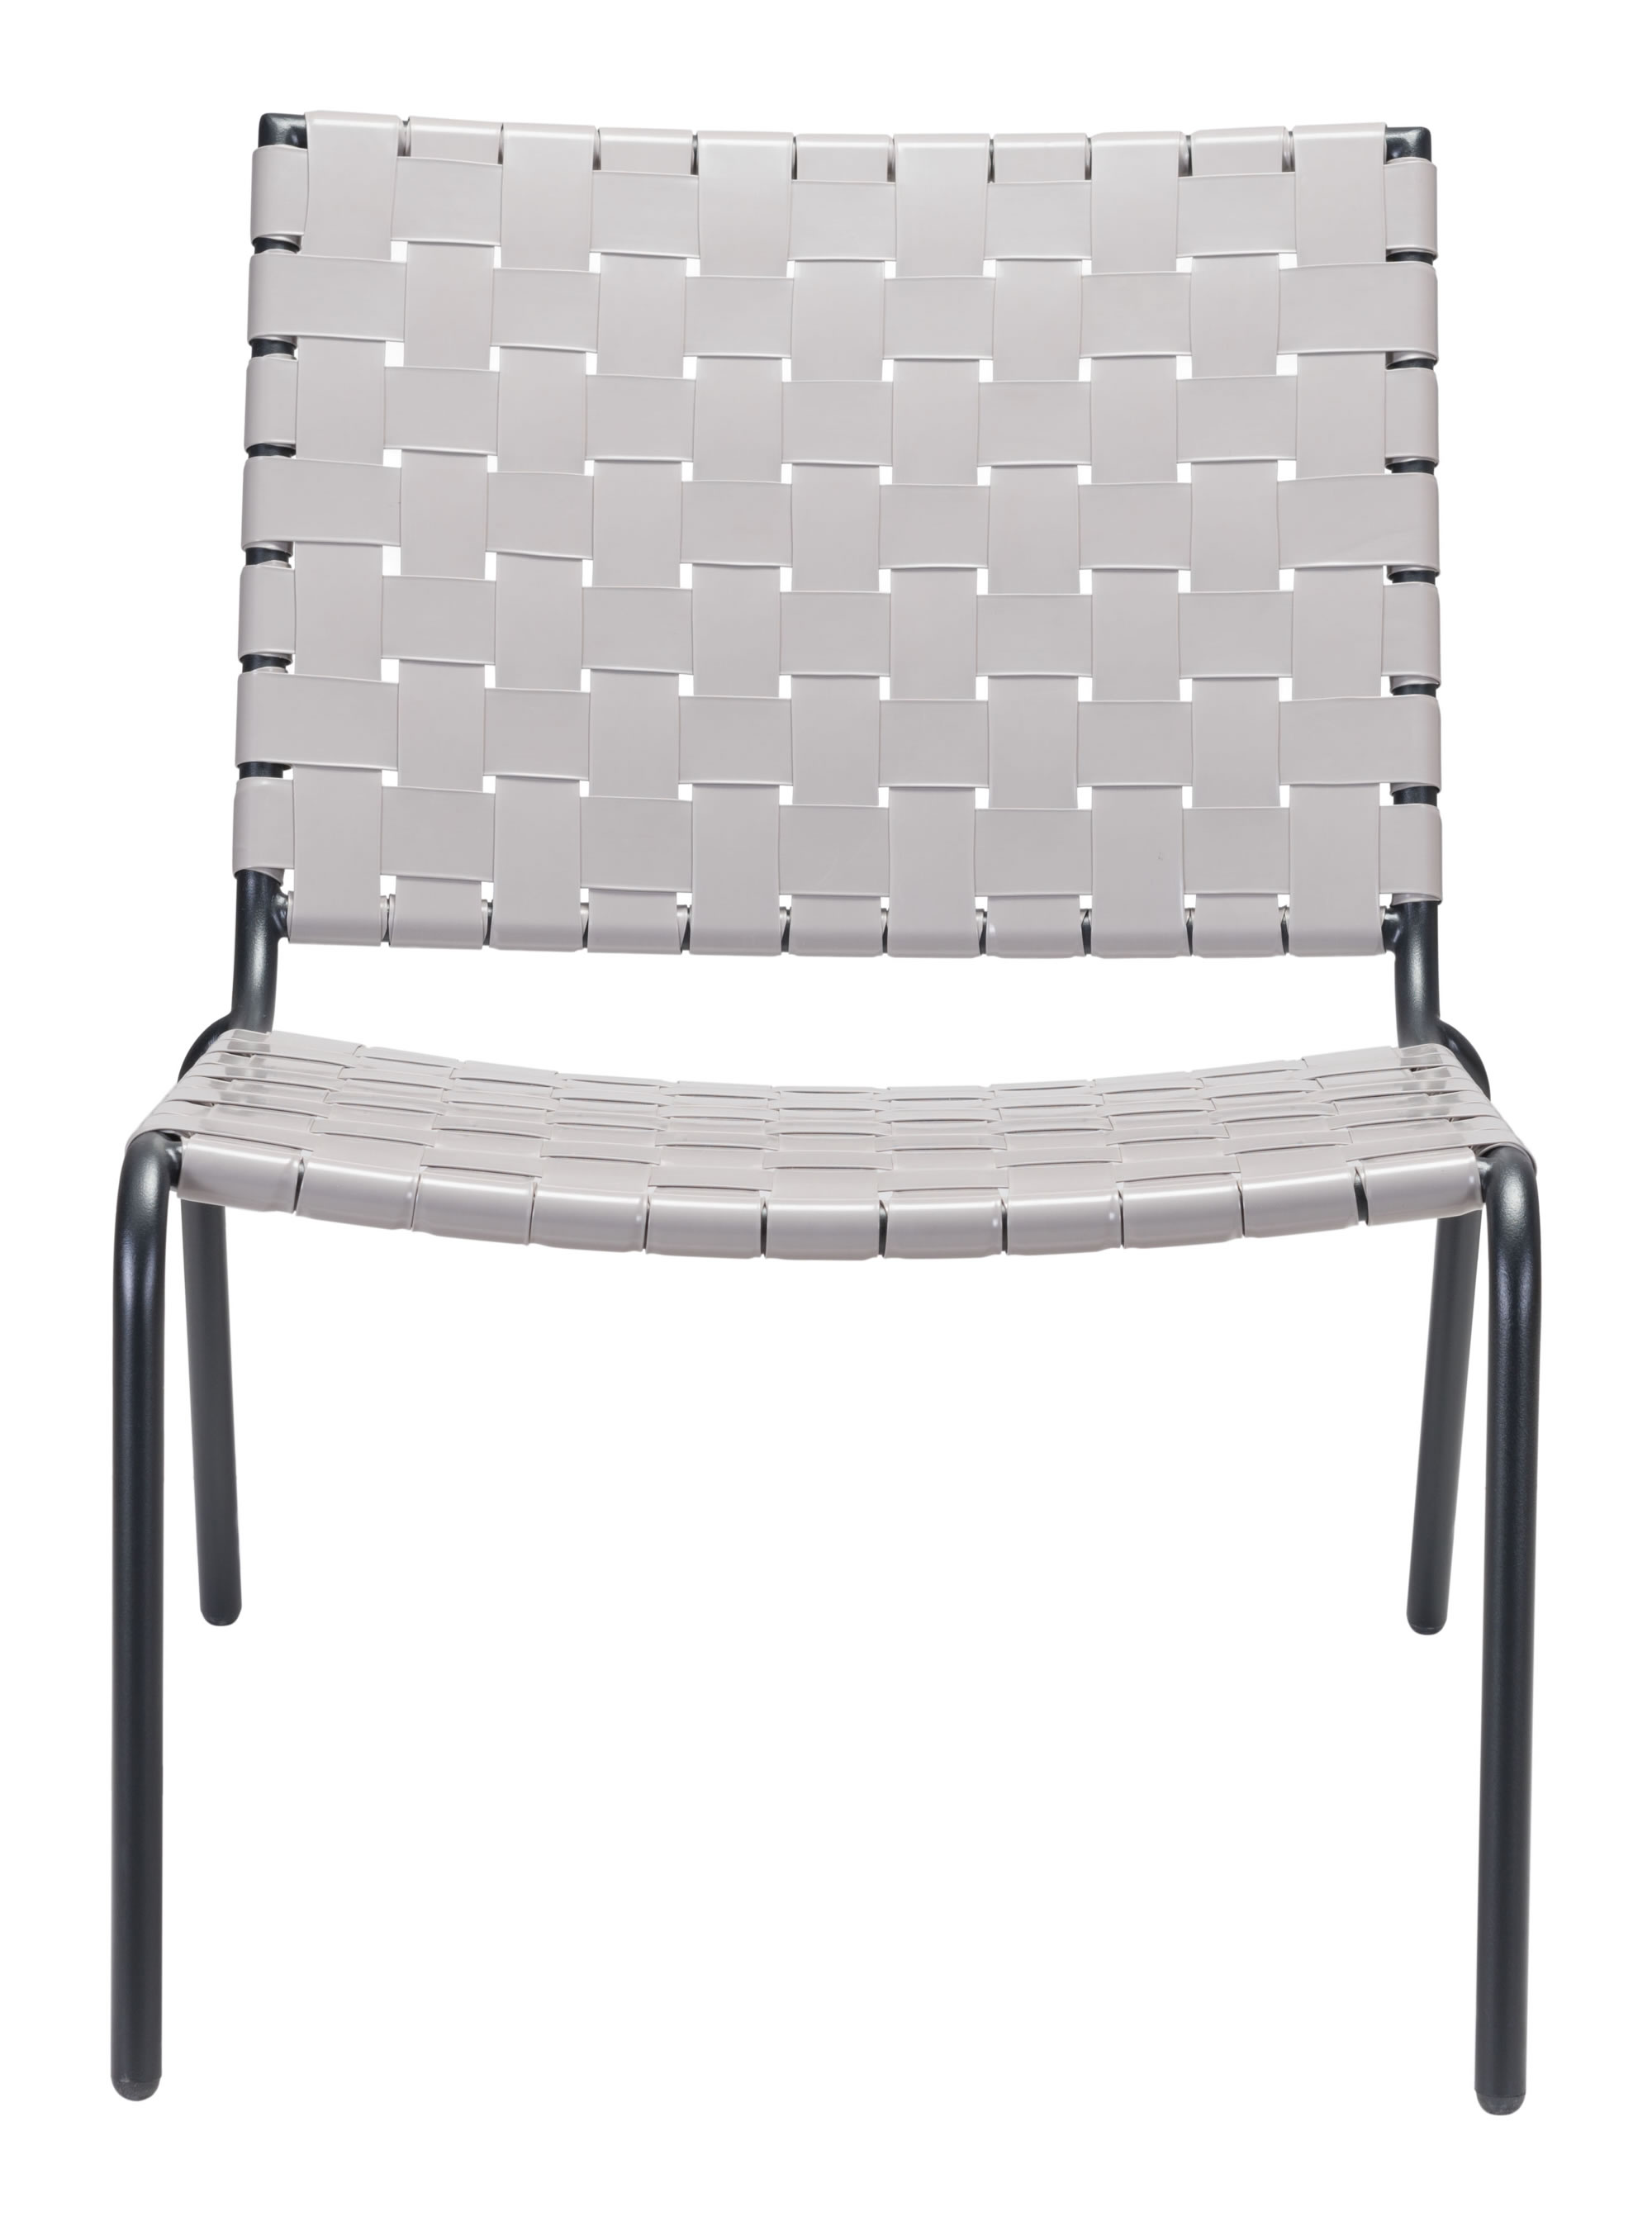 26.4" x 35.8" x 31.5" Light Gray, PVC, Steel, Lounge Chair